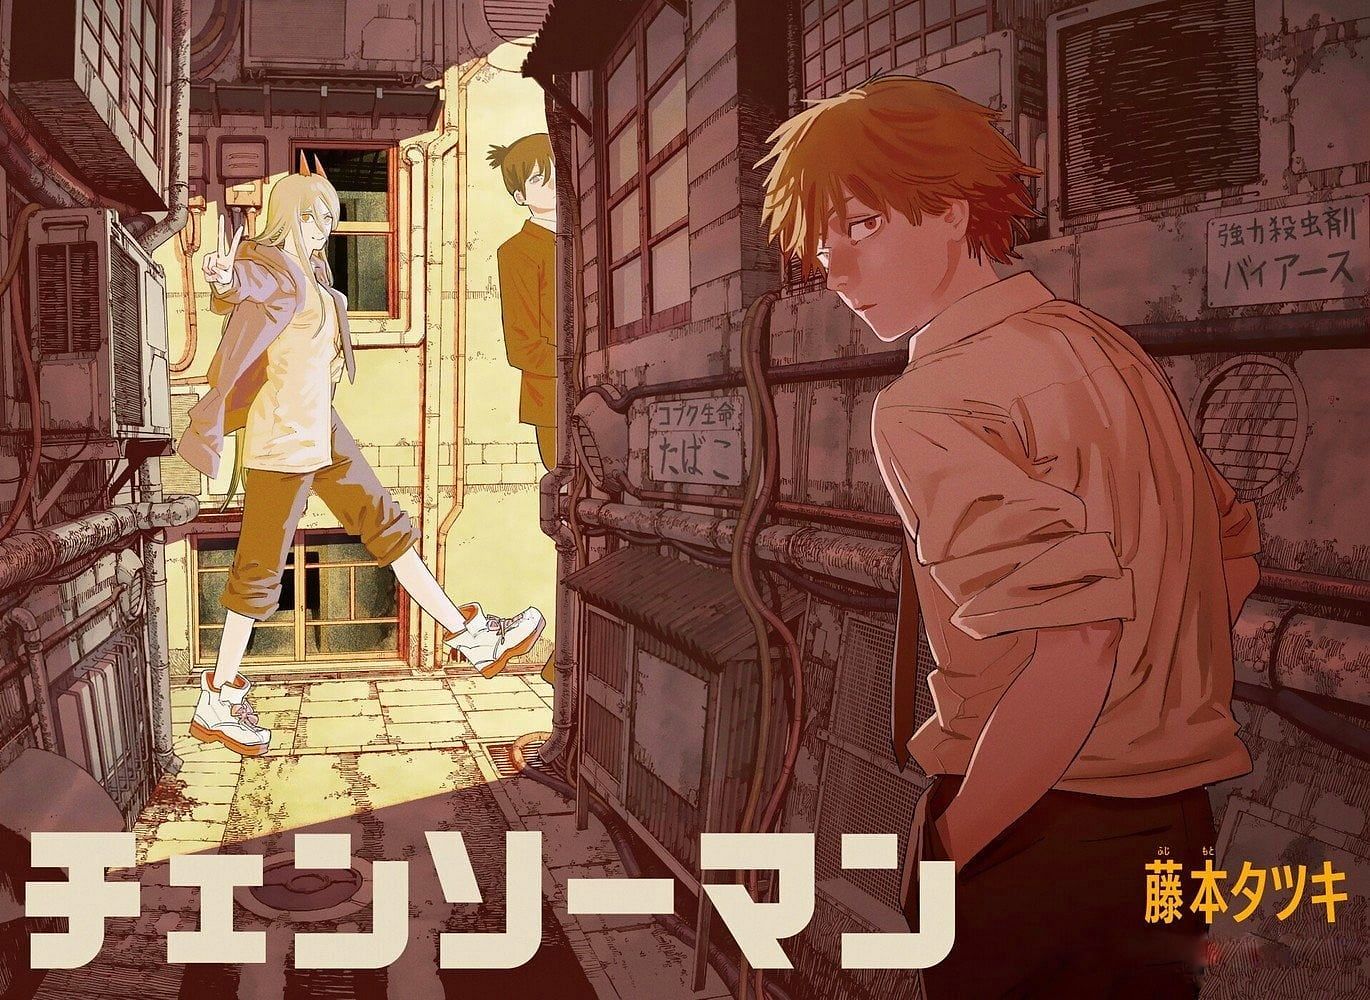 Denji, Aki, and Power on the cover of the Manga (Image via Shueisha)